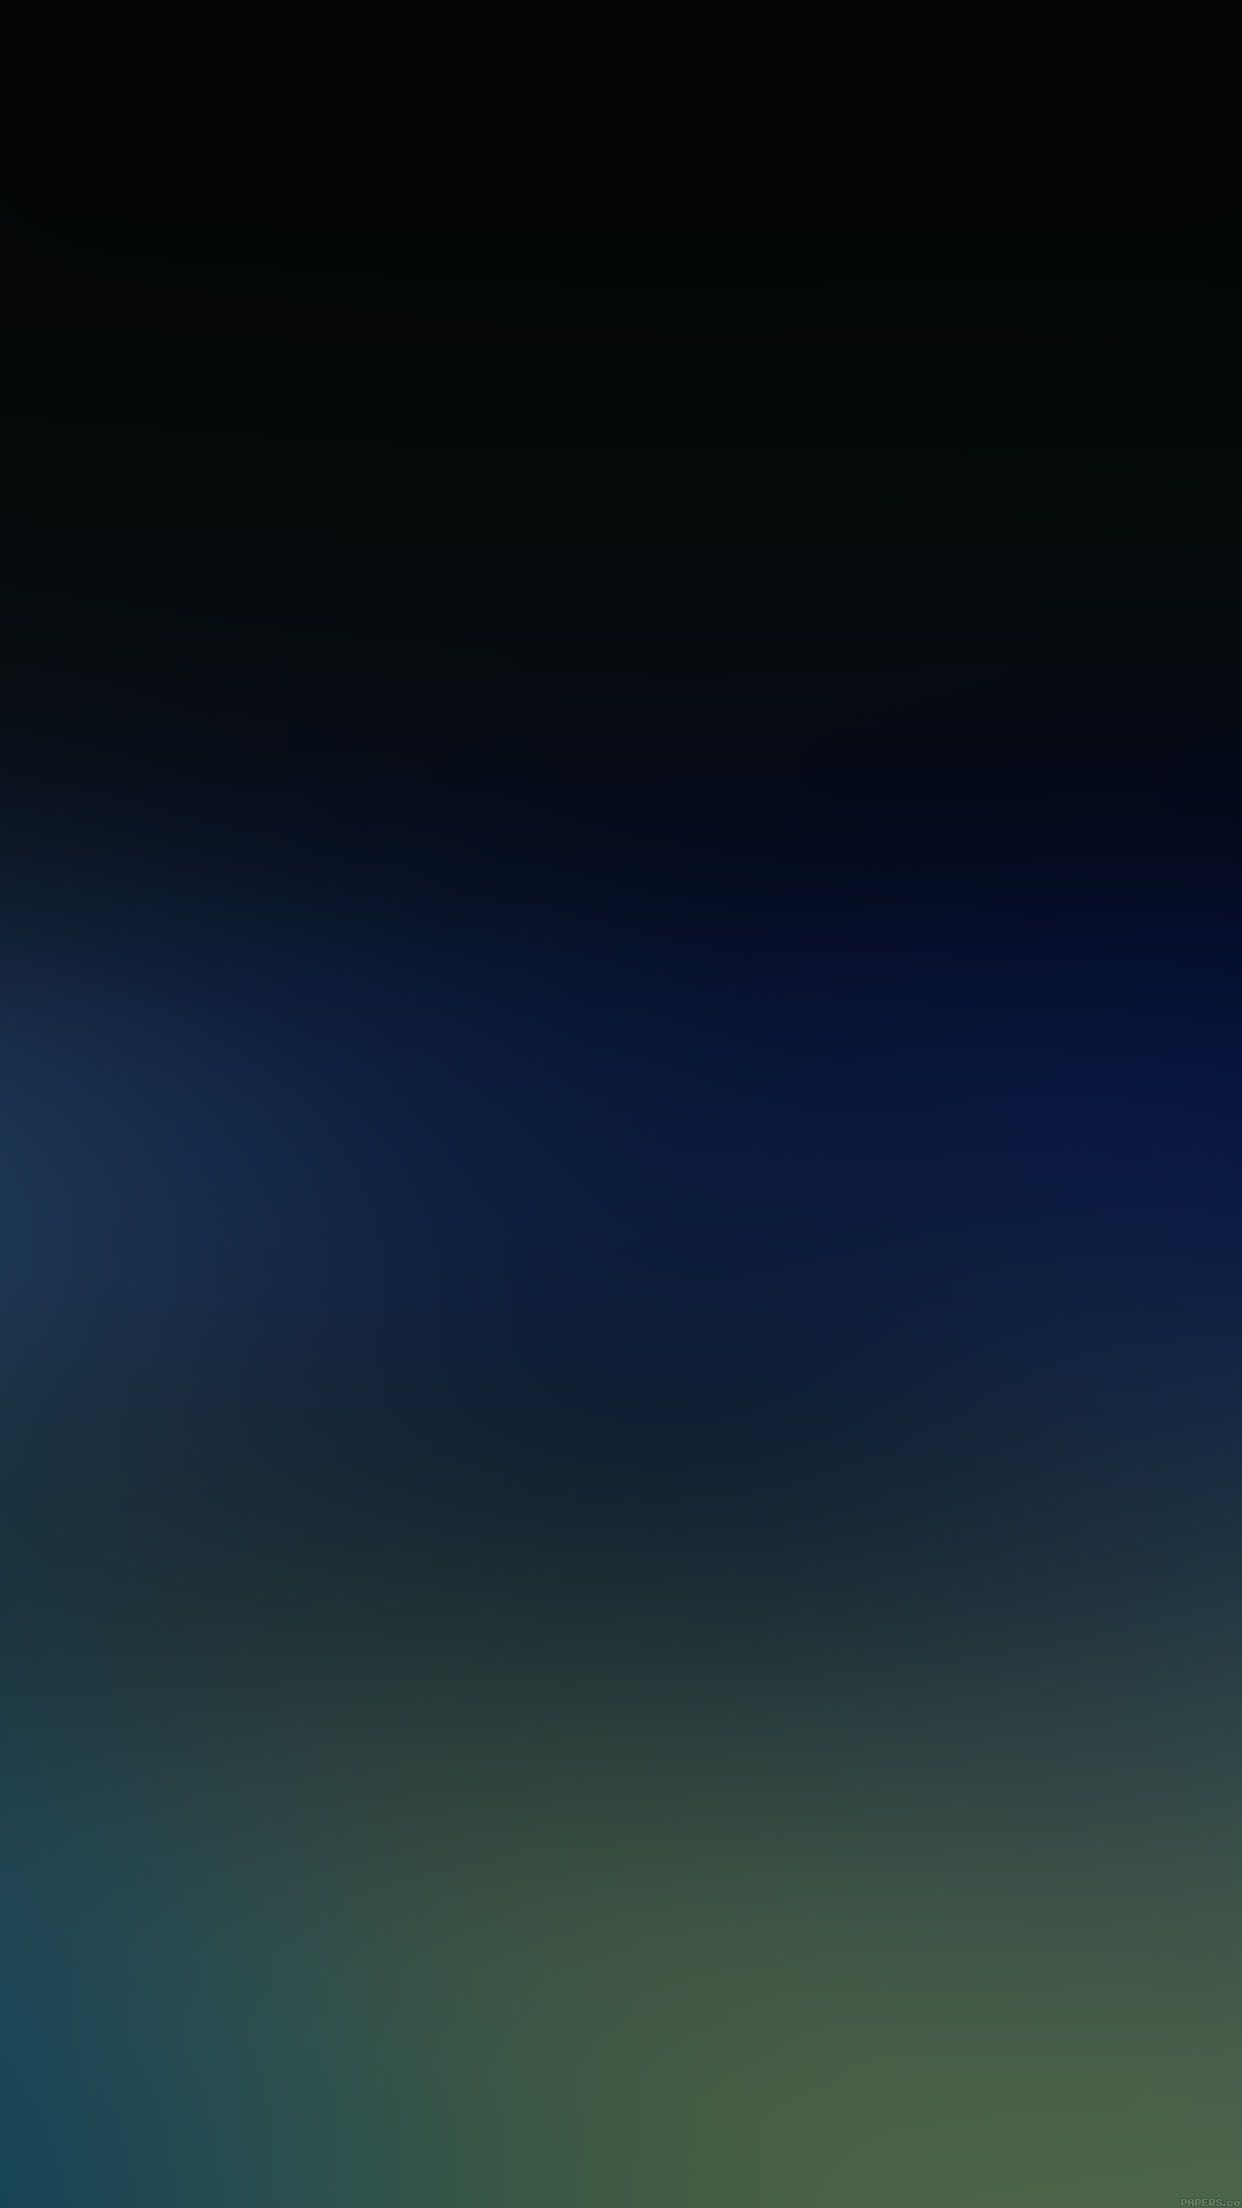 iPhone Black Blur Background